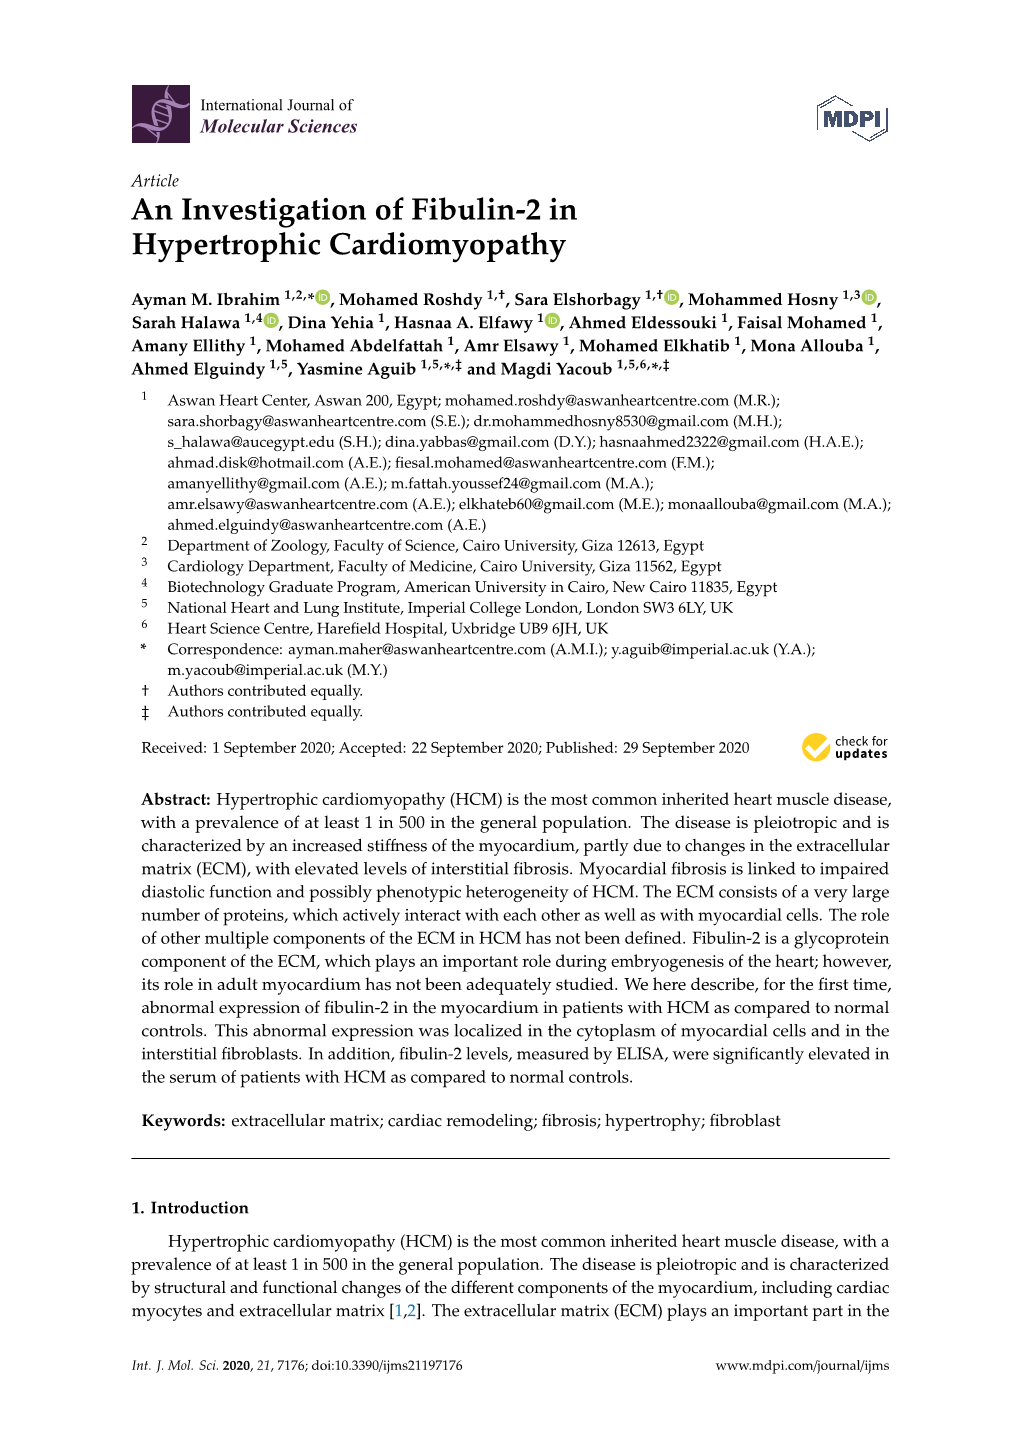 An Investigation of Fibulin-2 in Hypertrophic Cardiomyopathy